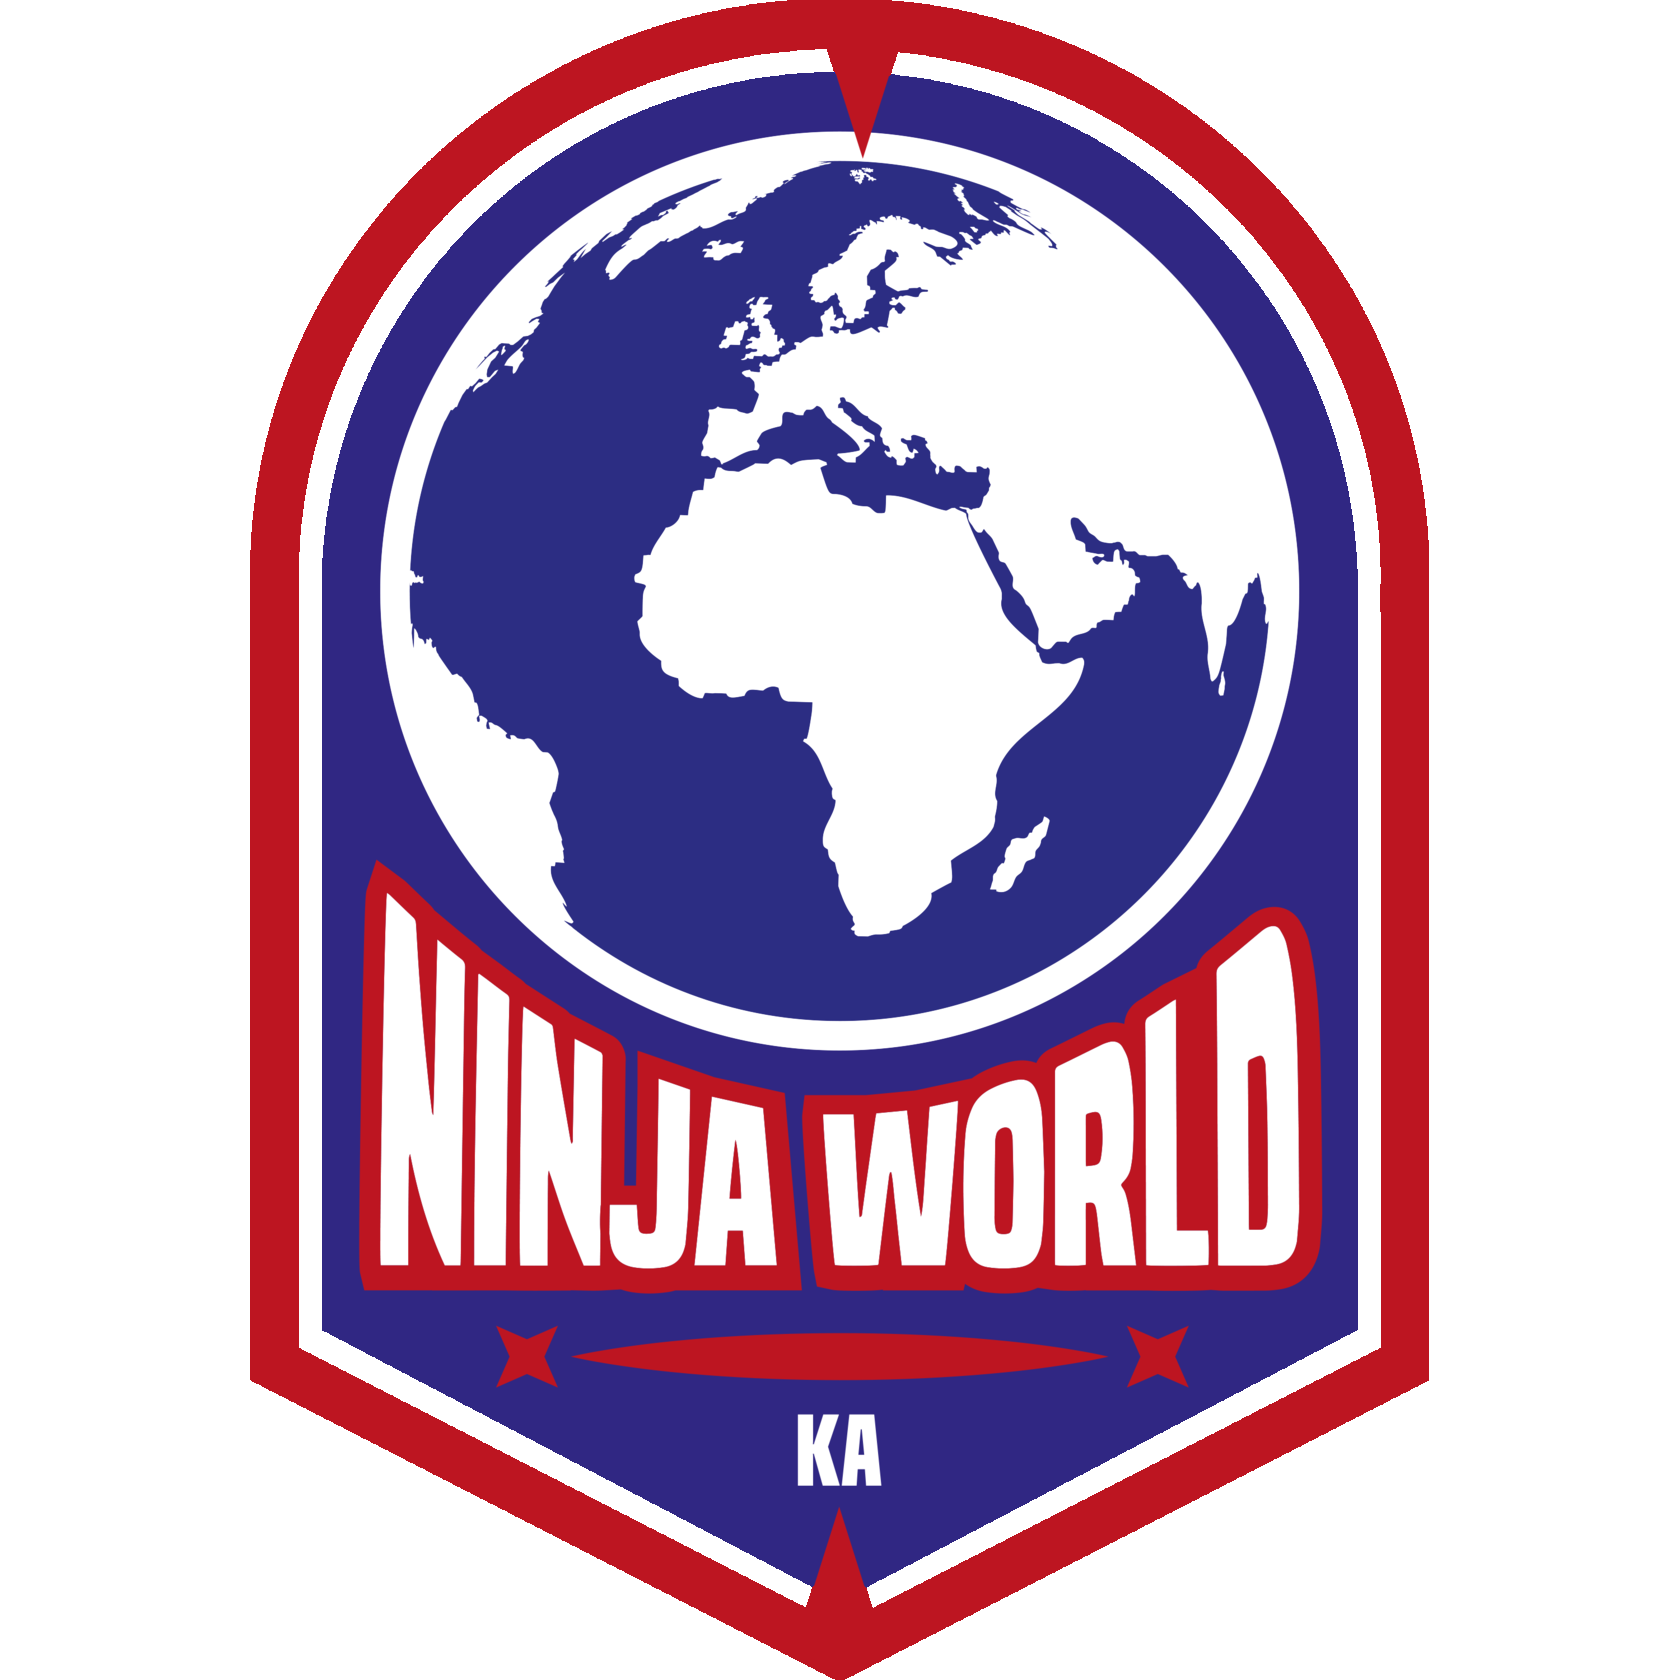 (c) Ninja-world.eu